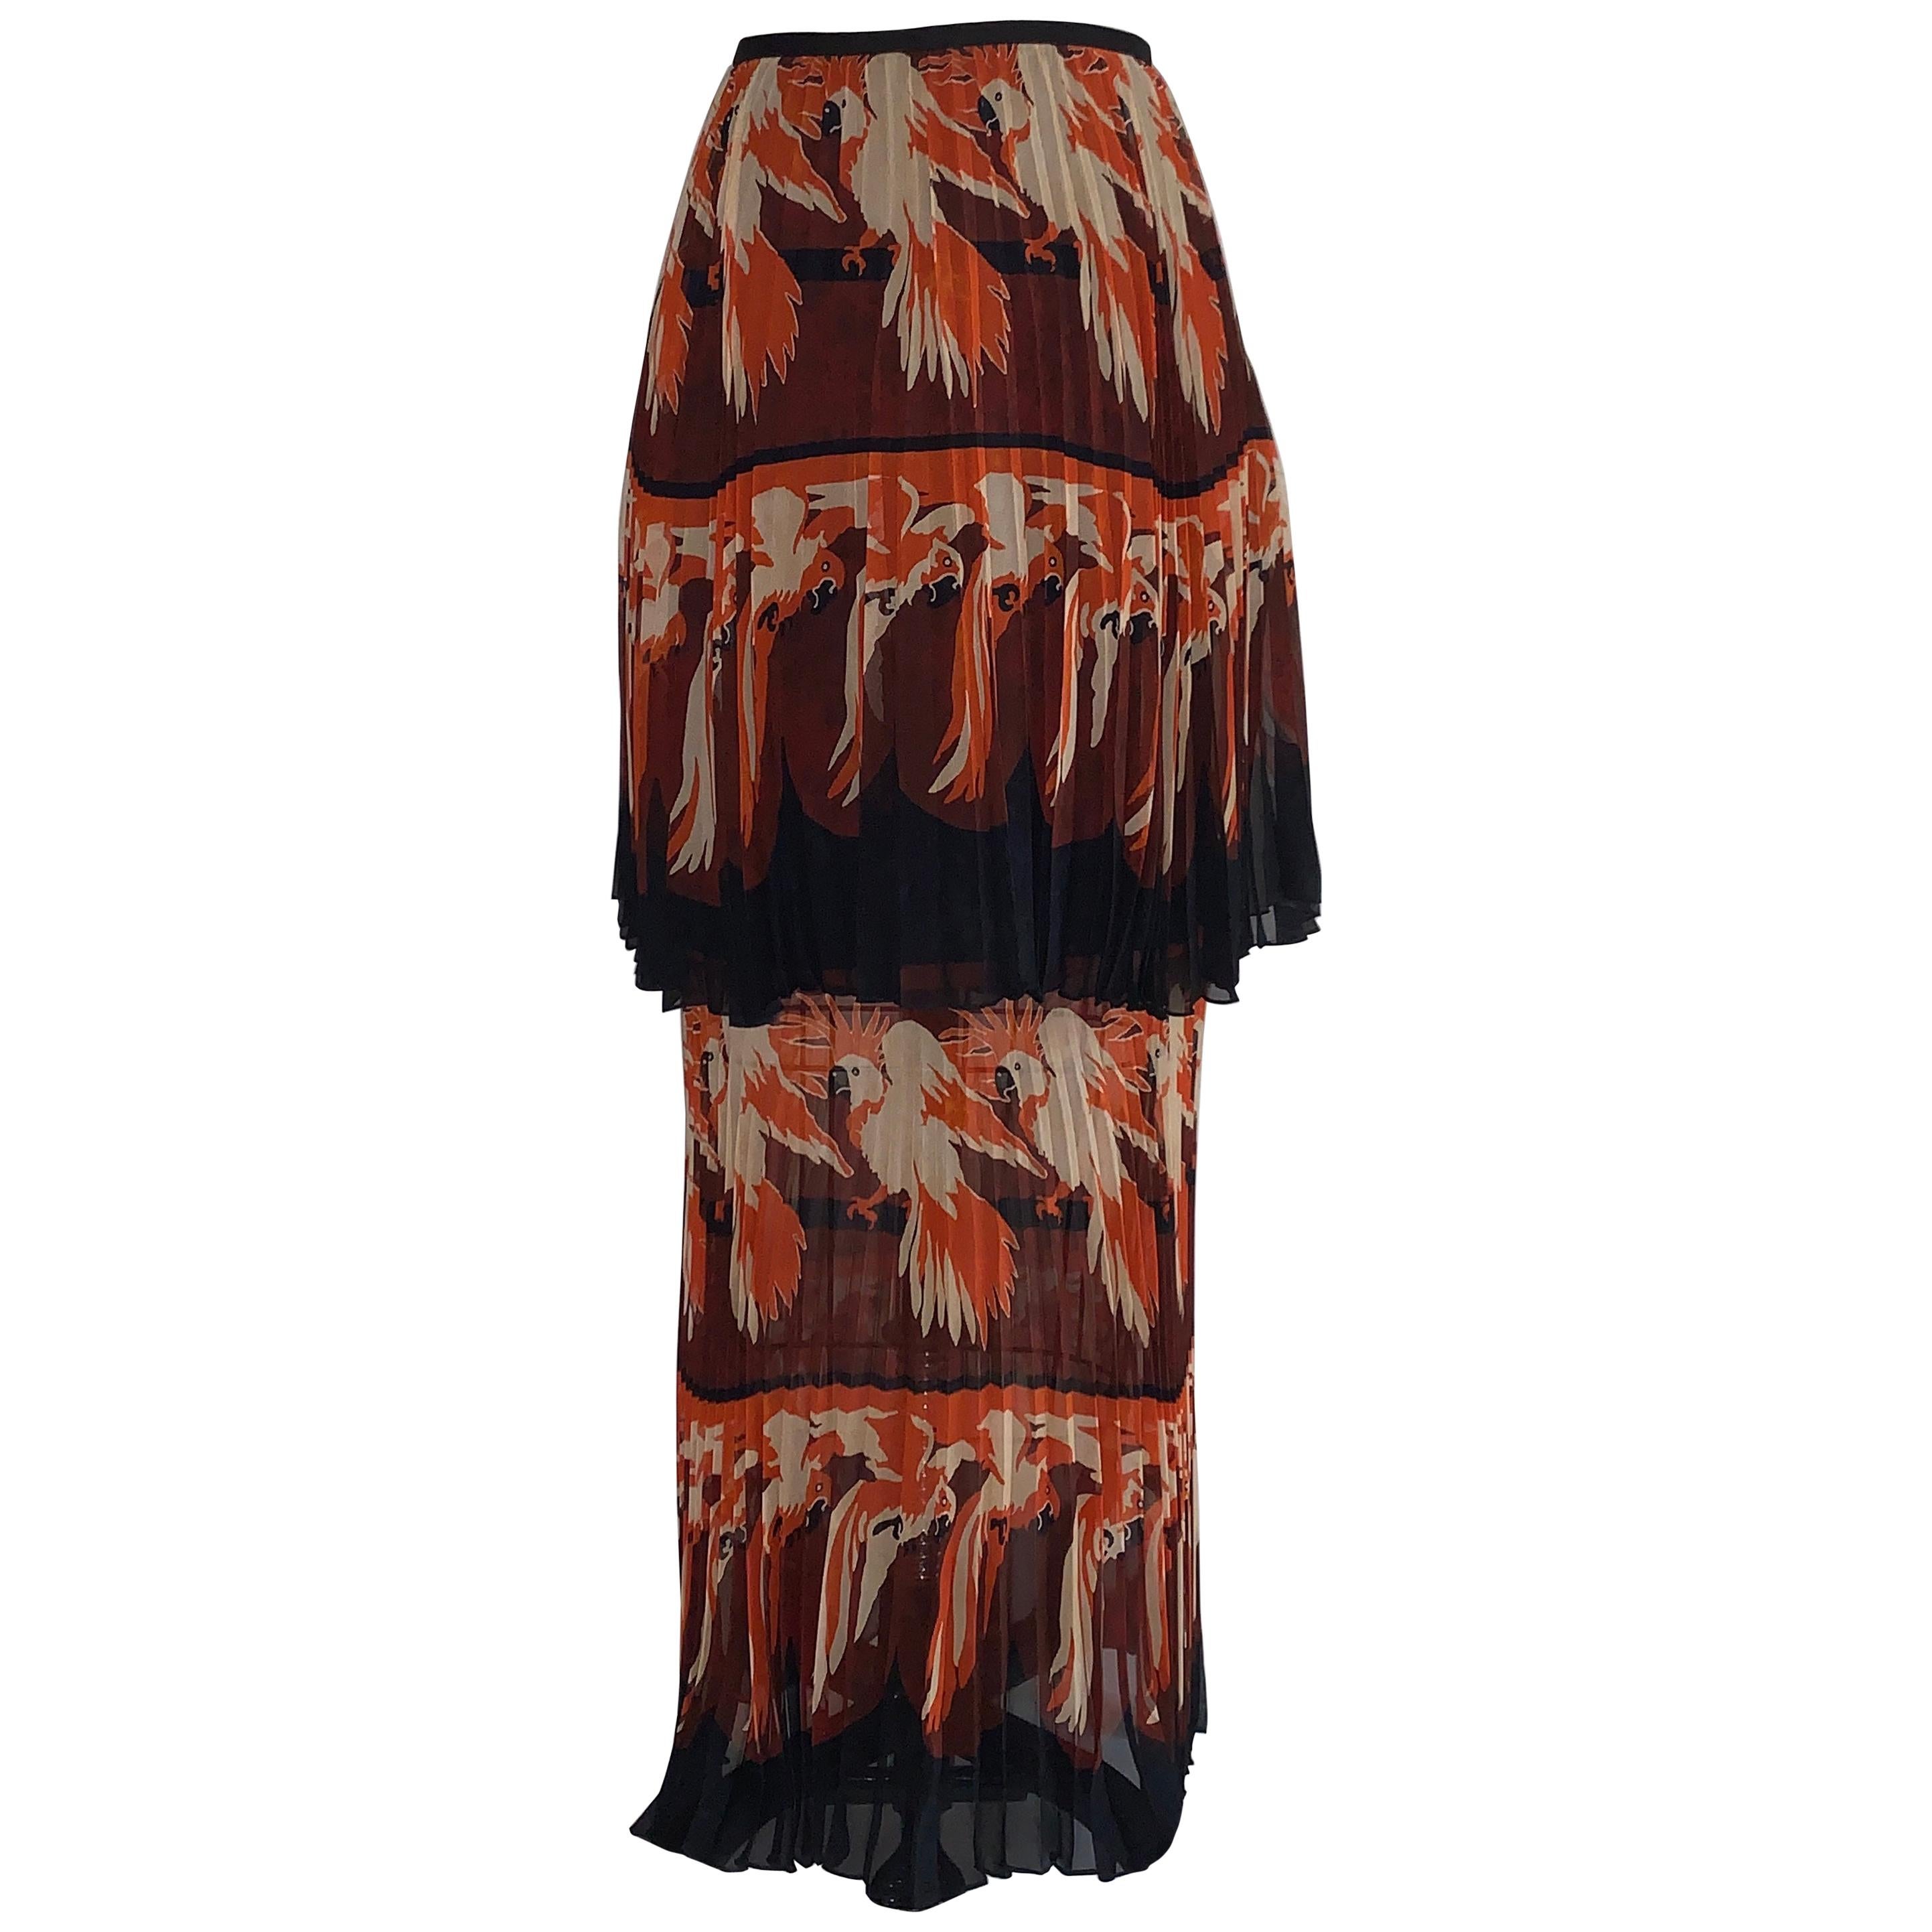 New Fendi Parakeet Print Silk Pleat Two Tier Skirt in Black, Orange and Burgundy